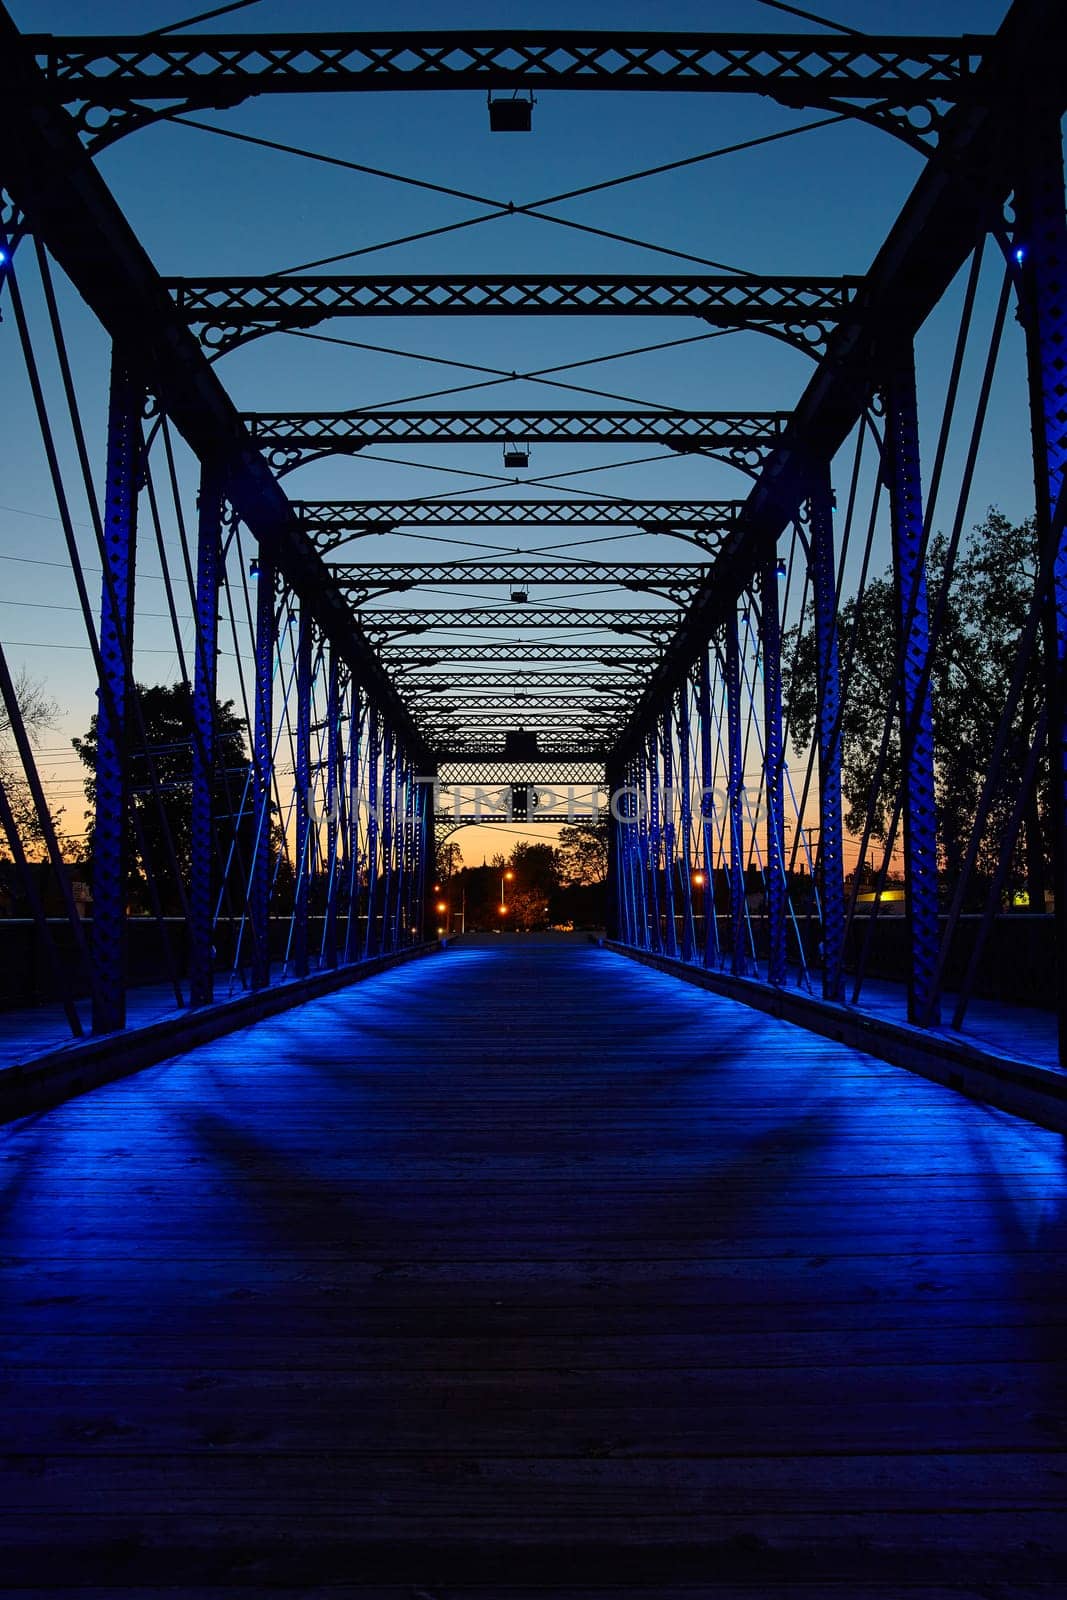 Twilight Tranquility on Wells Street Bridge, Fort Wayne by njproductions